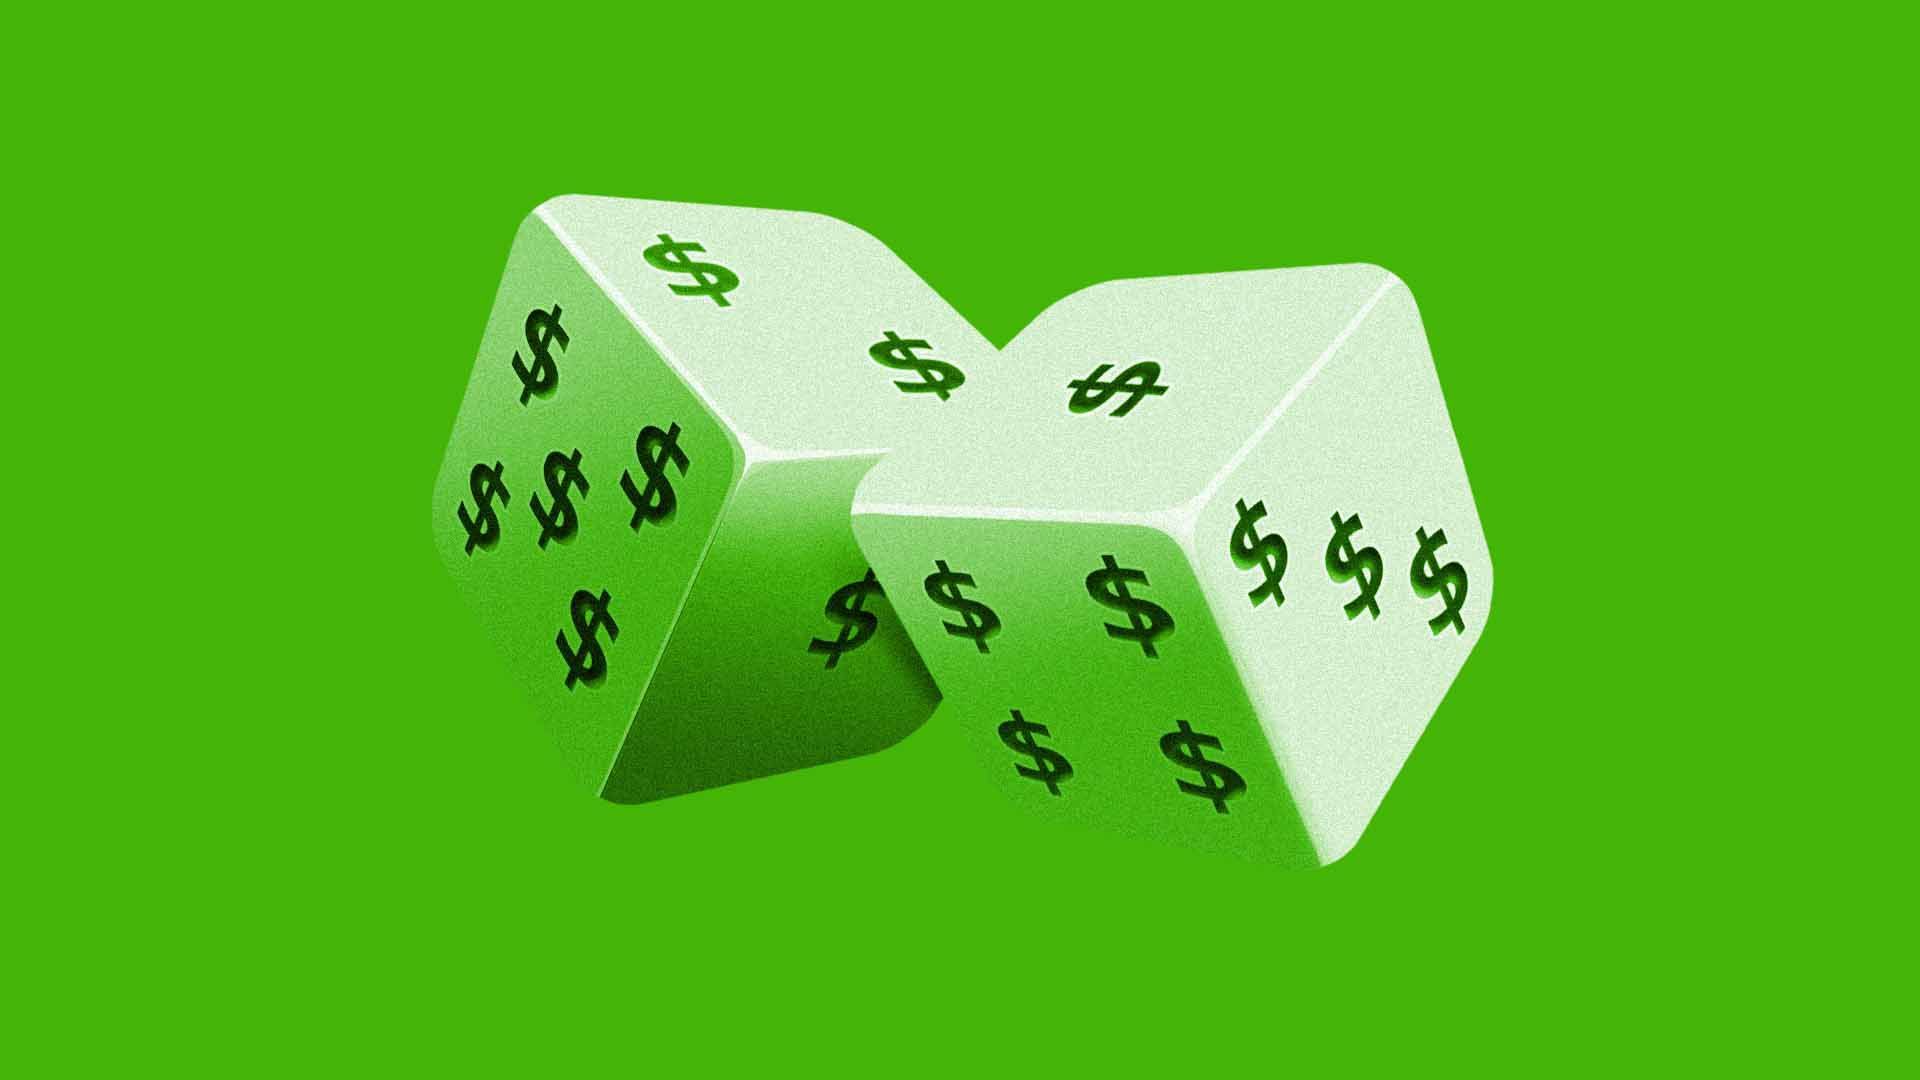 Illustration of two dice with dollar symbols on them